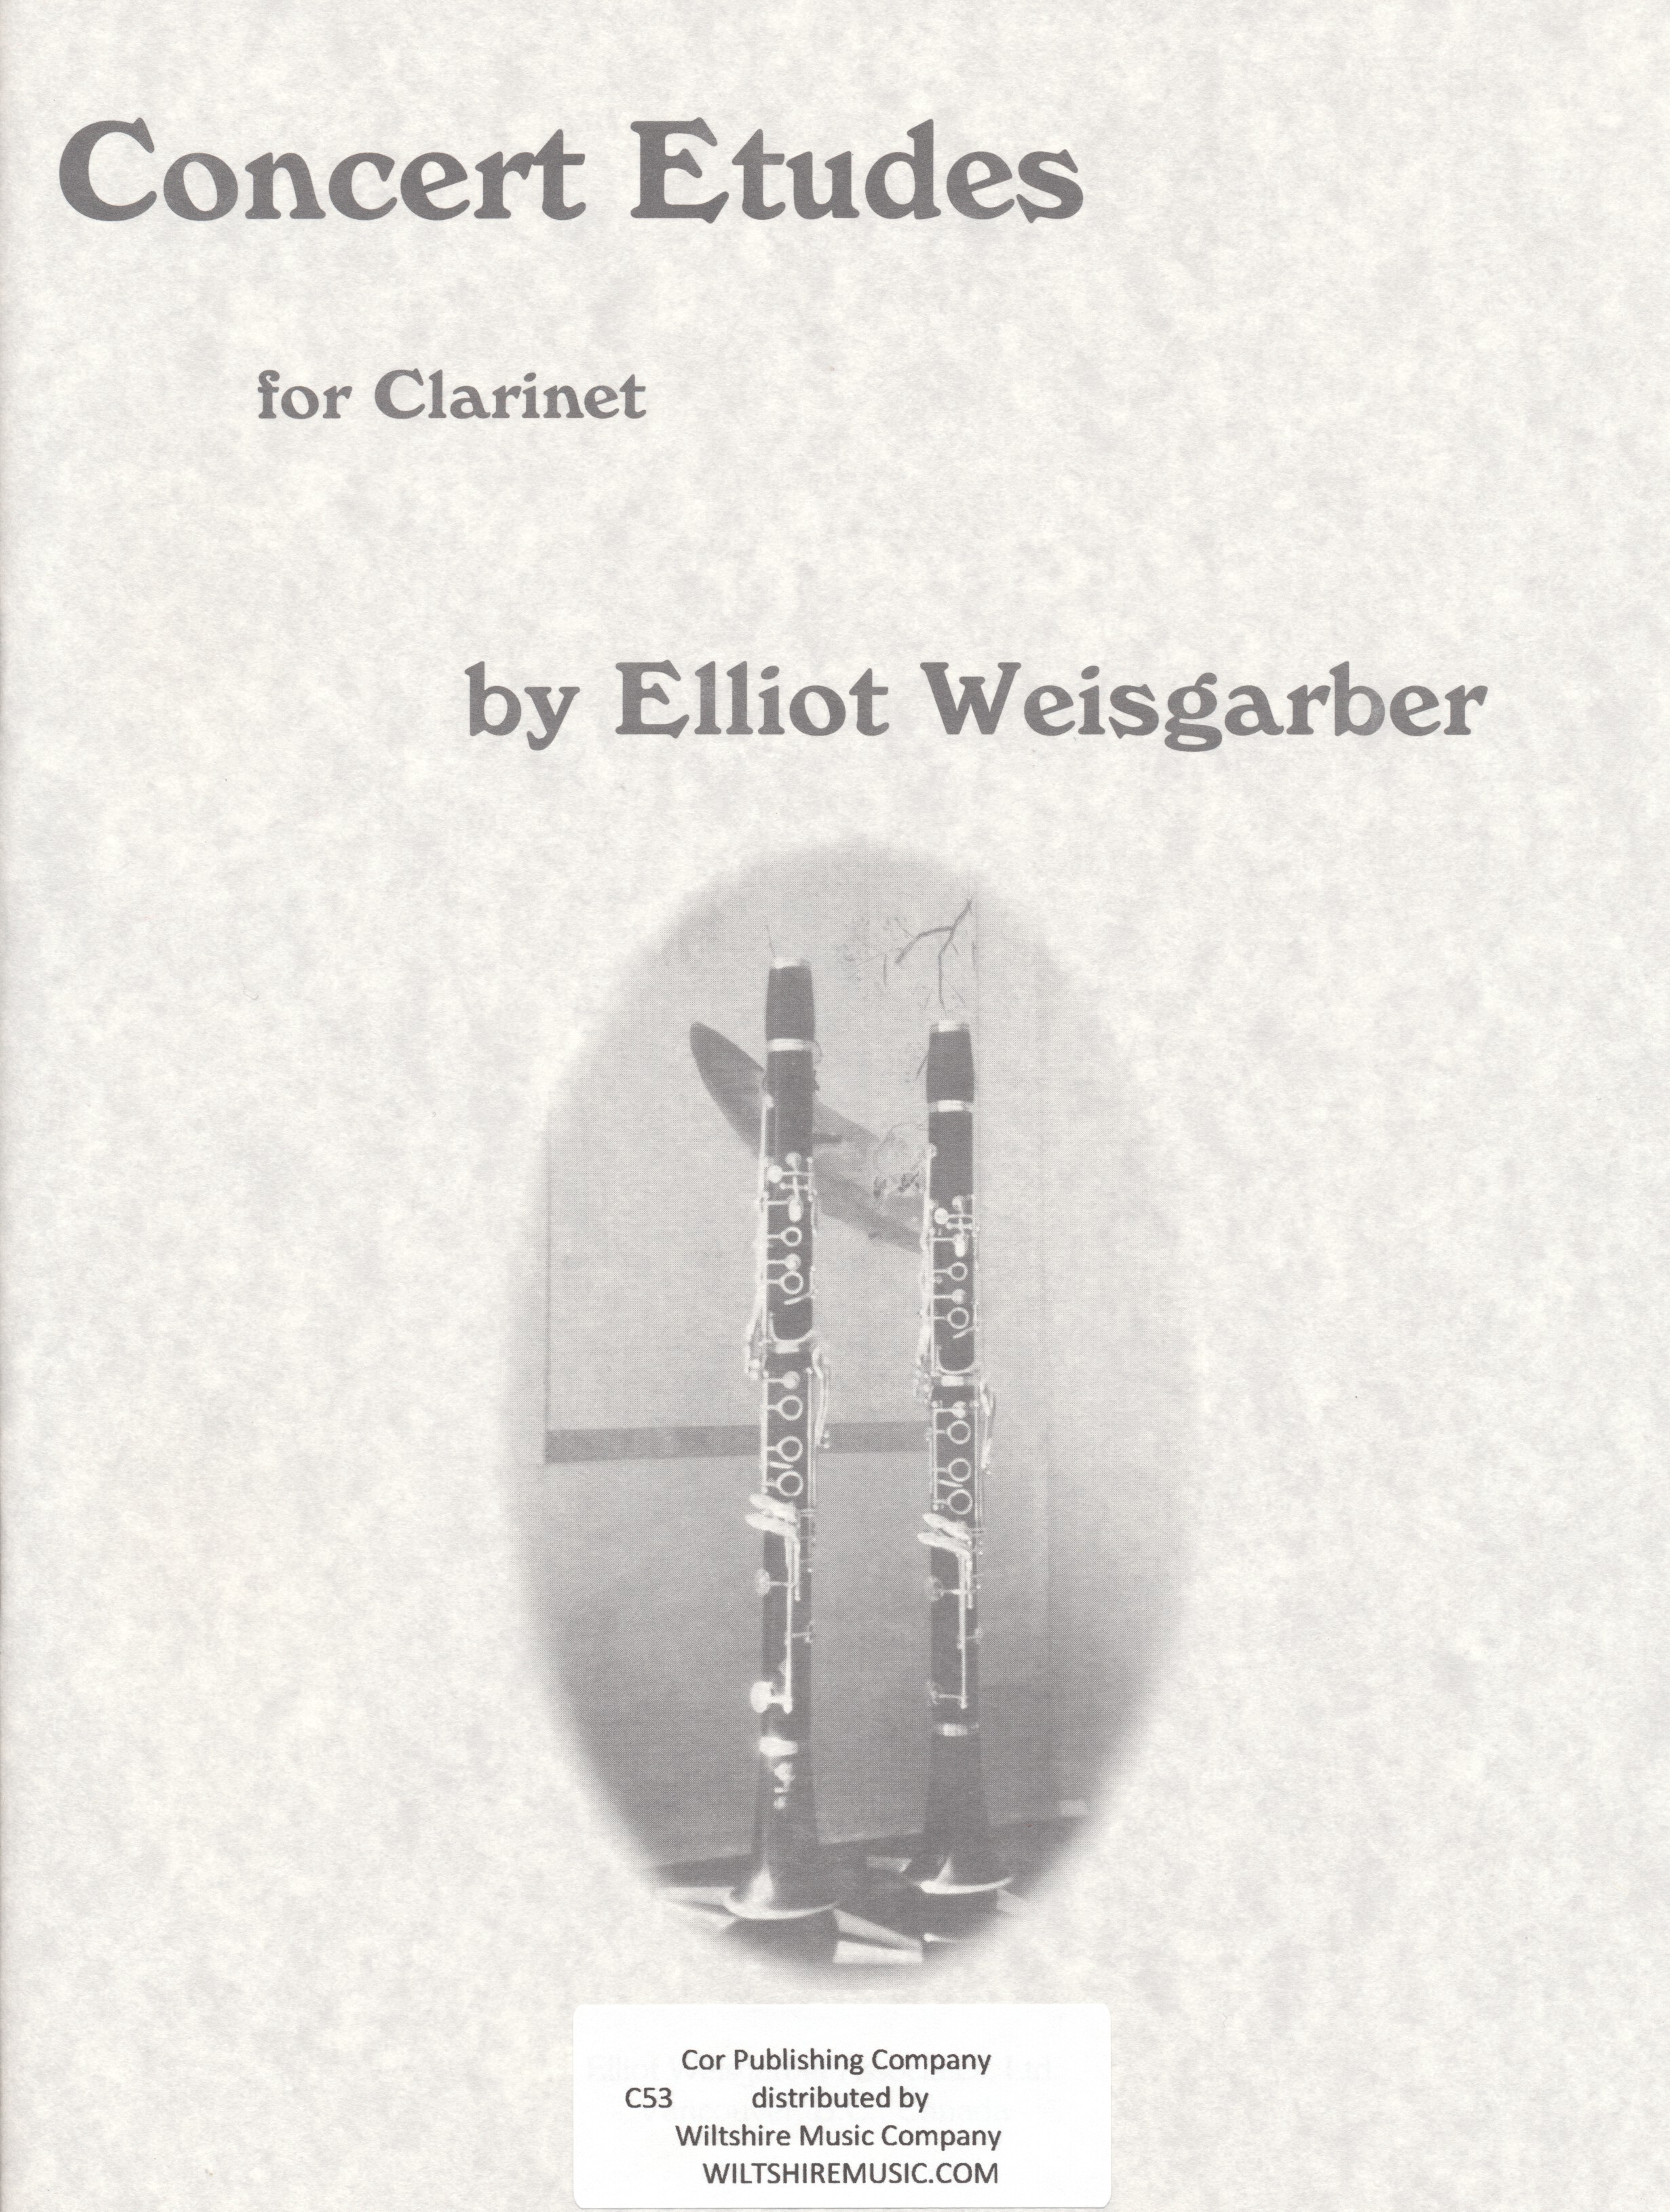 Concert Etudes for Calrinet, Elliot Weisgarber